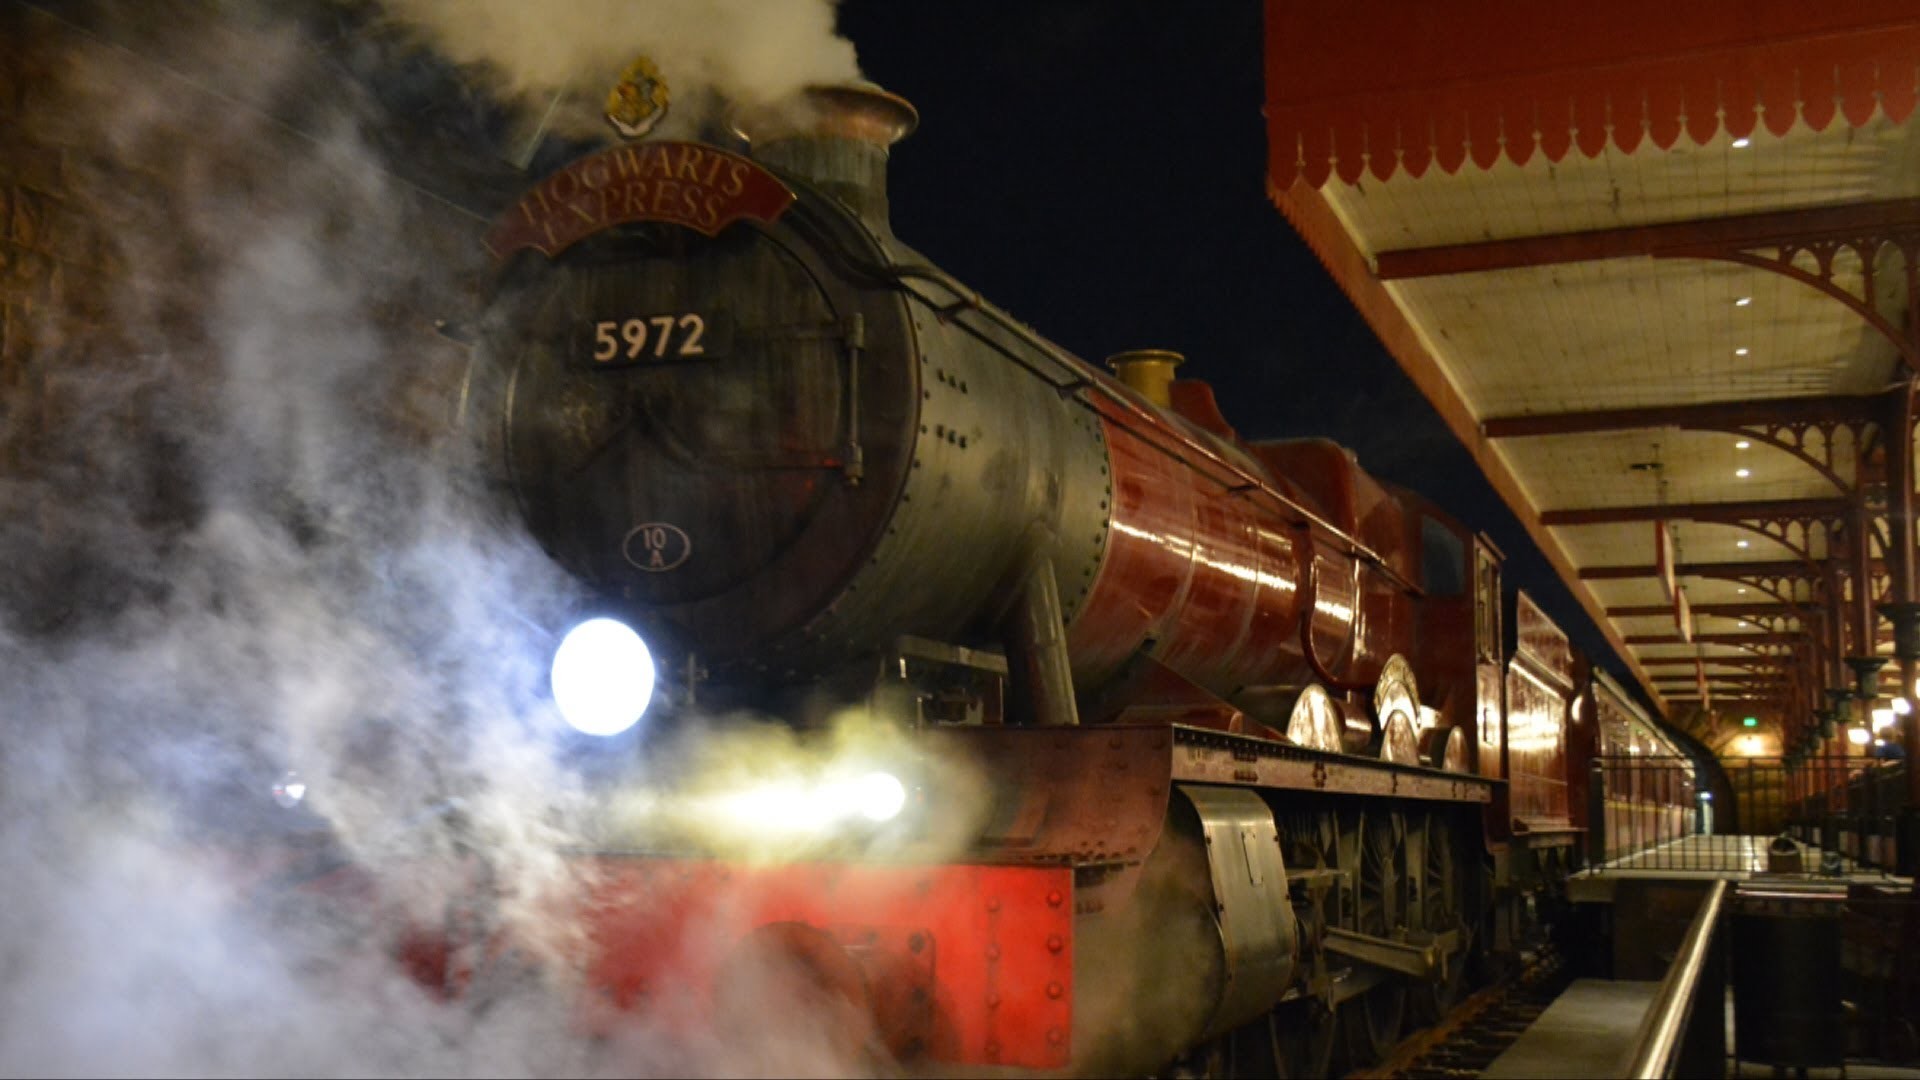 1920x1080 Hogwarts Express from King's Cross Station to Hogsmeade Spoiler Free Tour  including Platform 9 Â¾